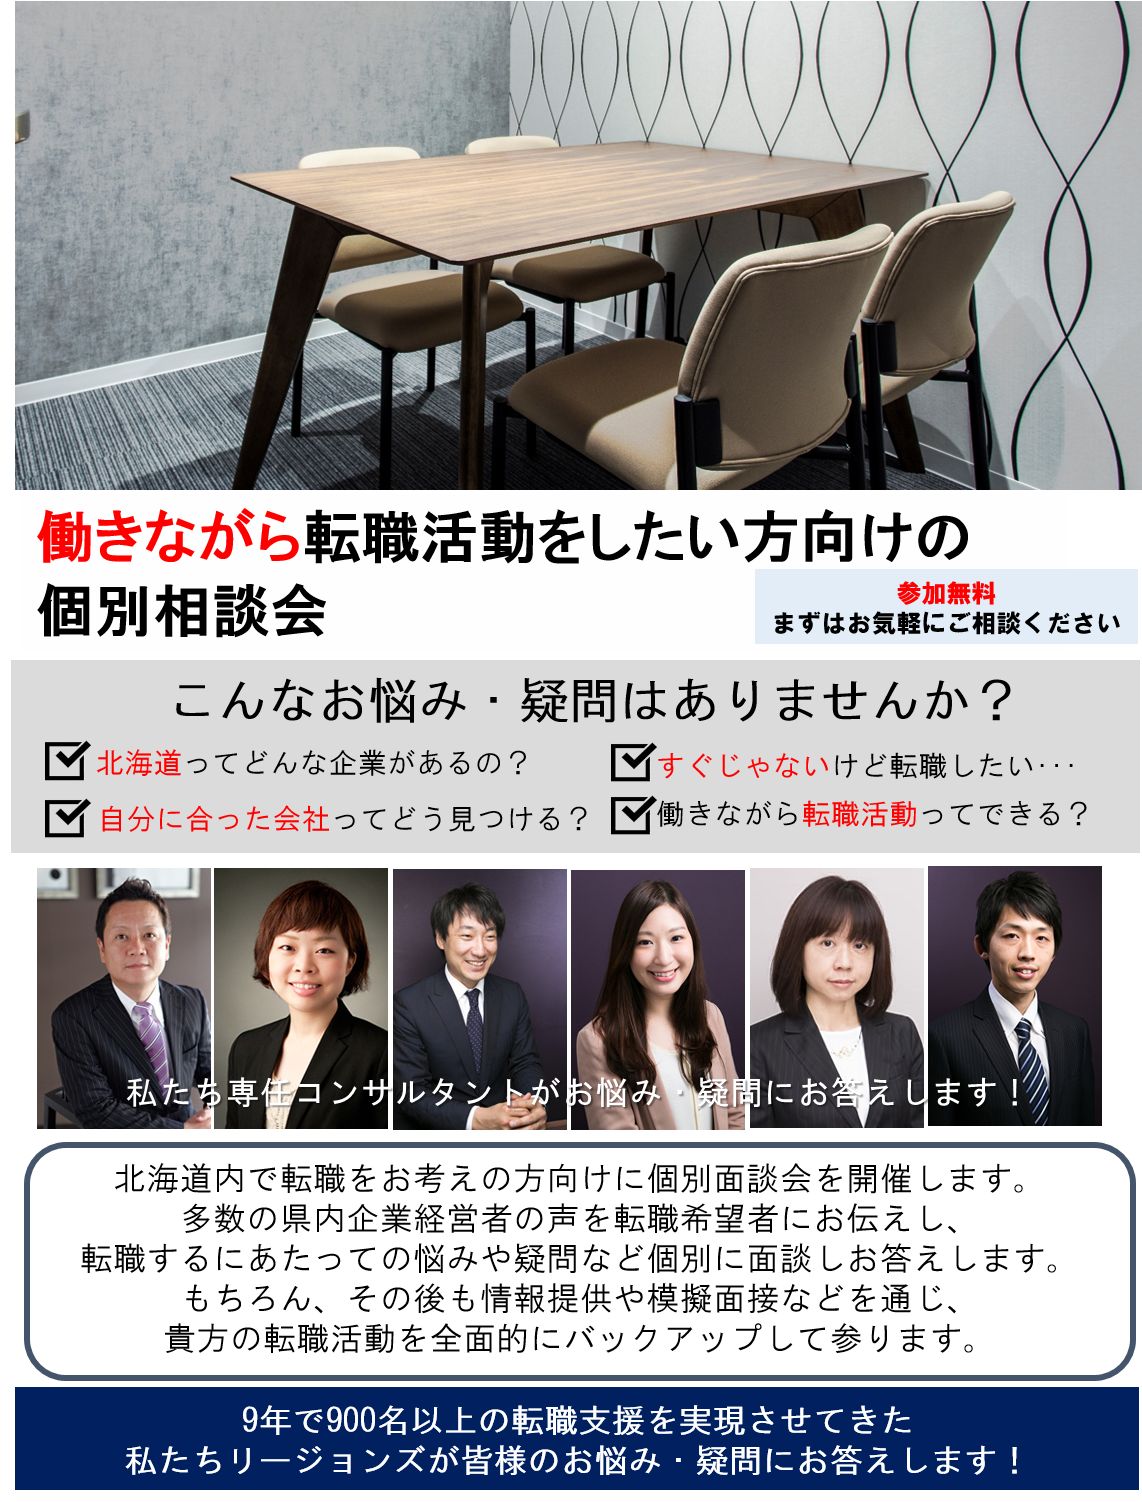 http://www.regional.co.jp/career_mt/0804%EF%BD%93.png